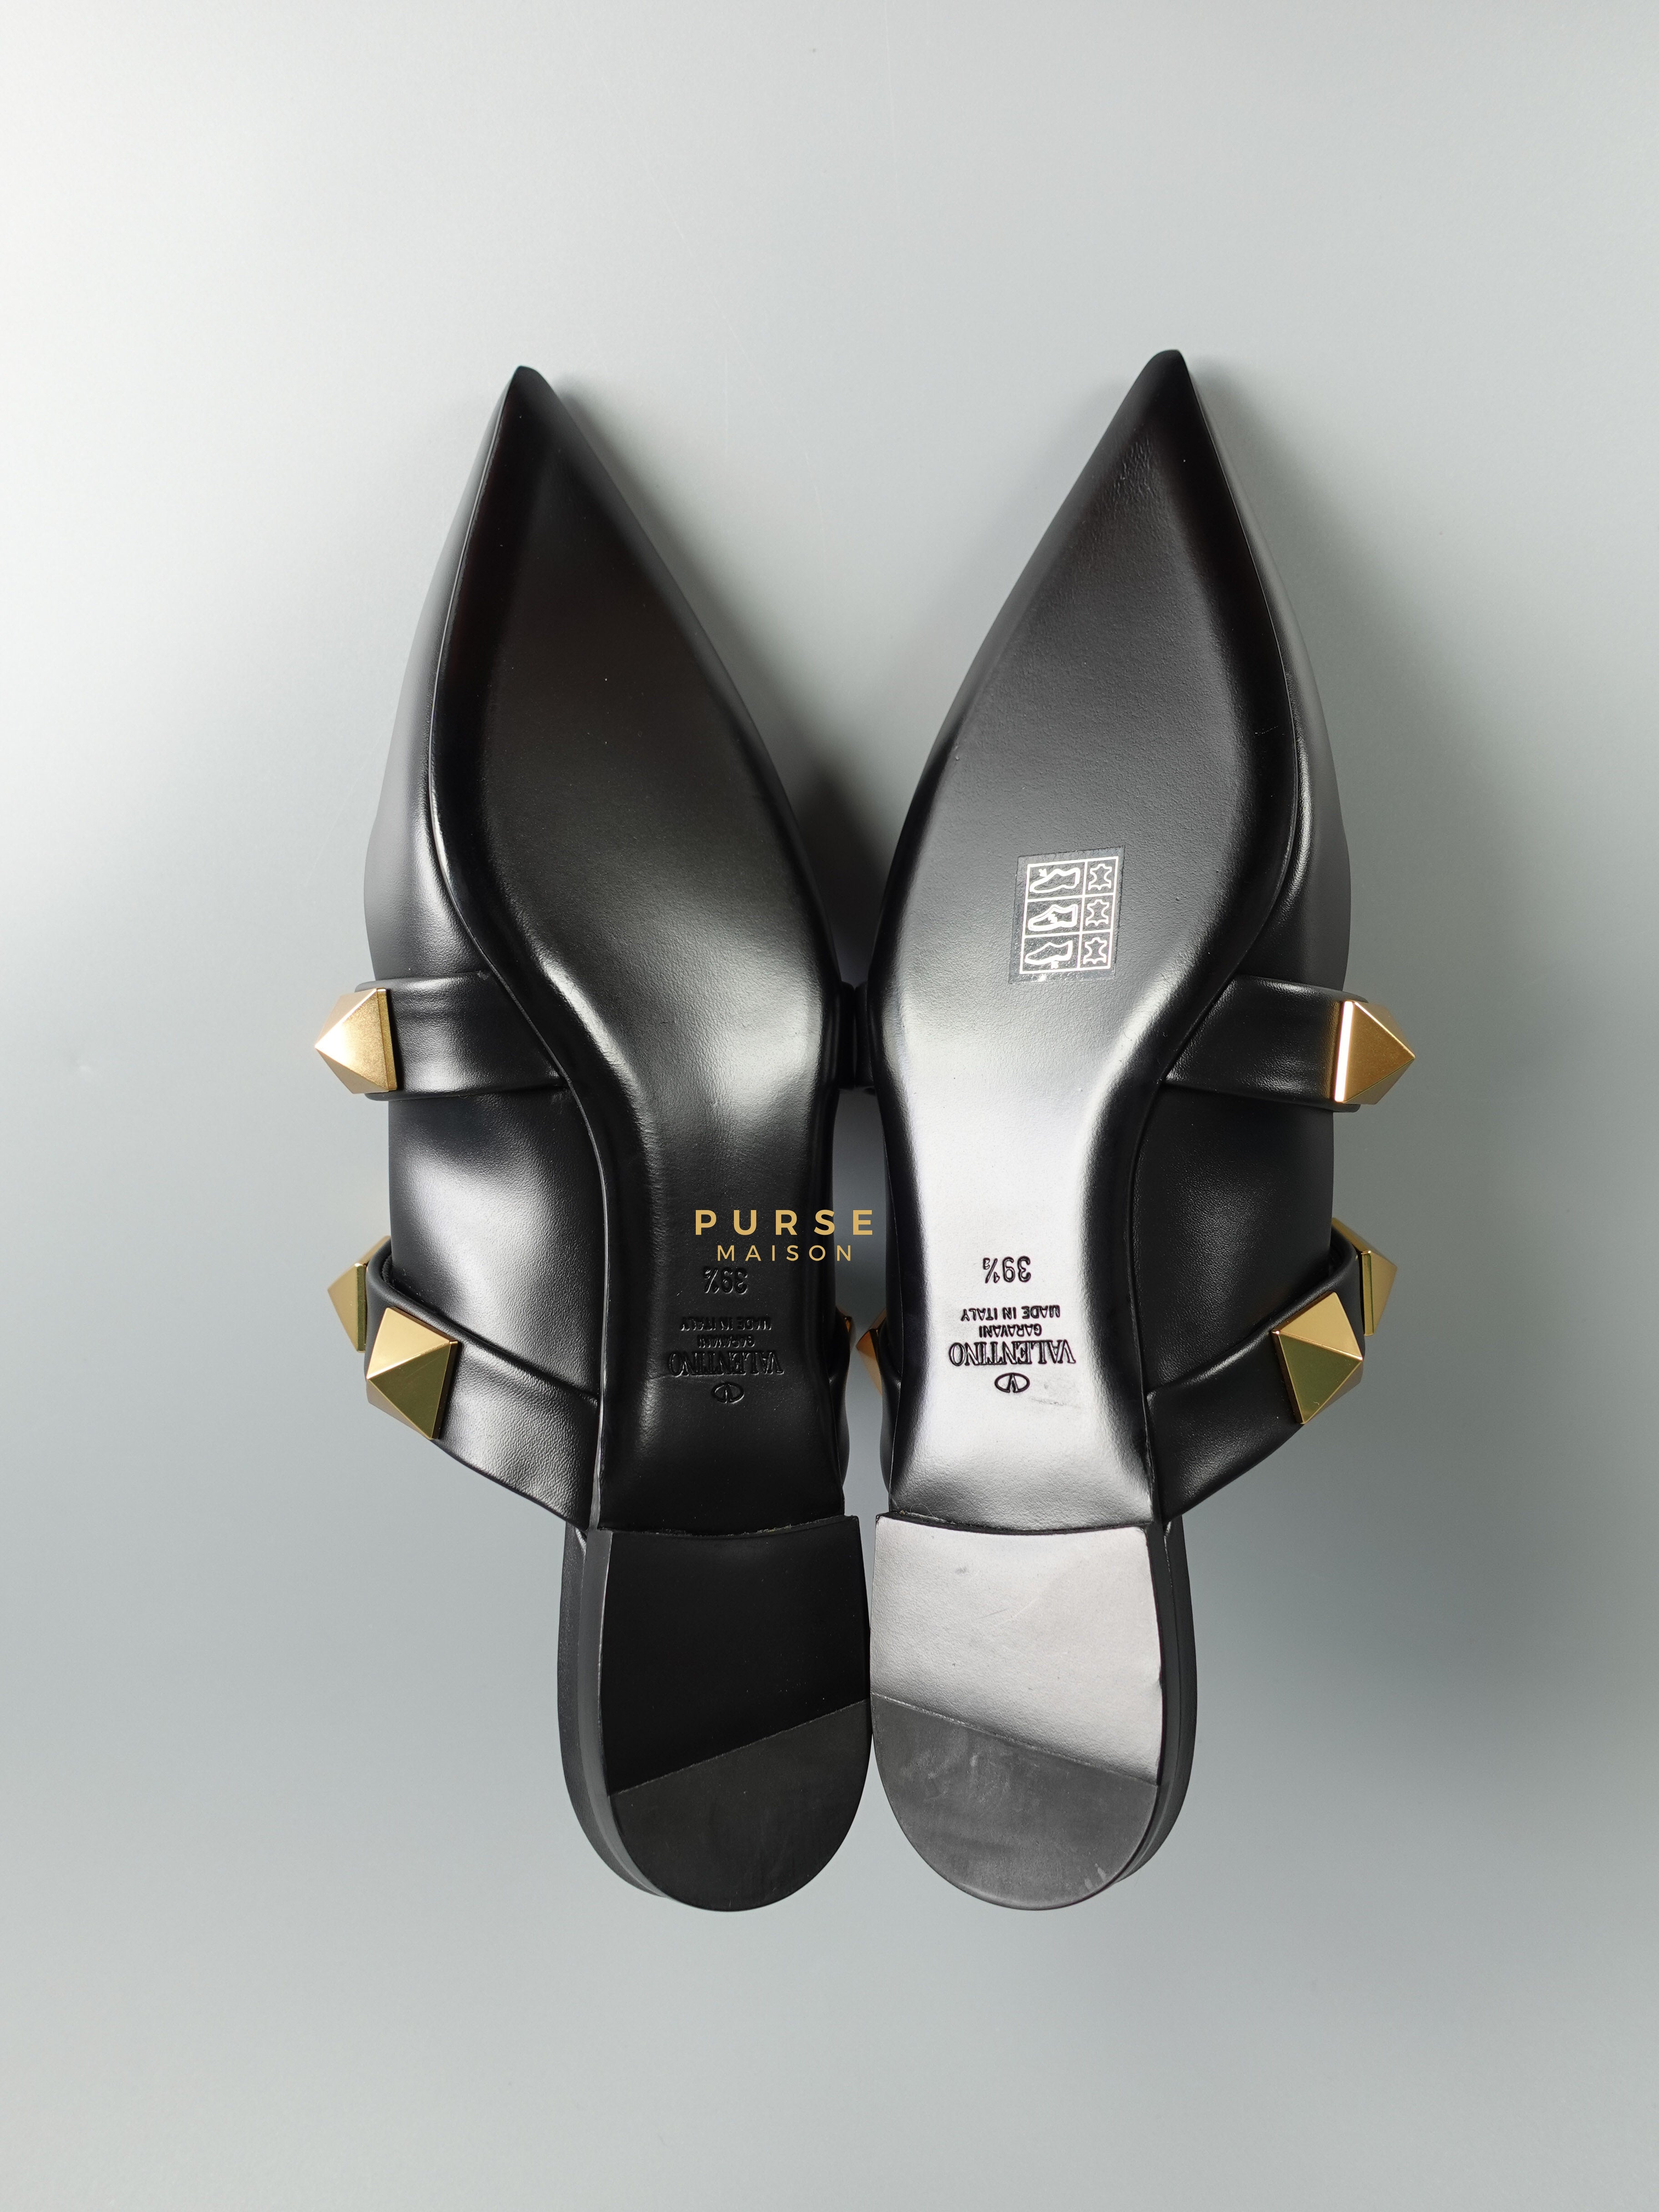 Valentino Garavani Black Leather Rockstud Mules Size 39.5 | Purse Maison Luxury Bags Shop